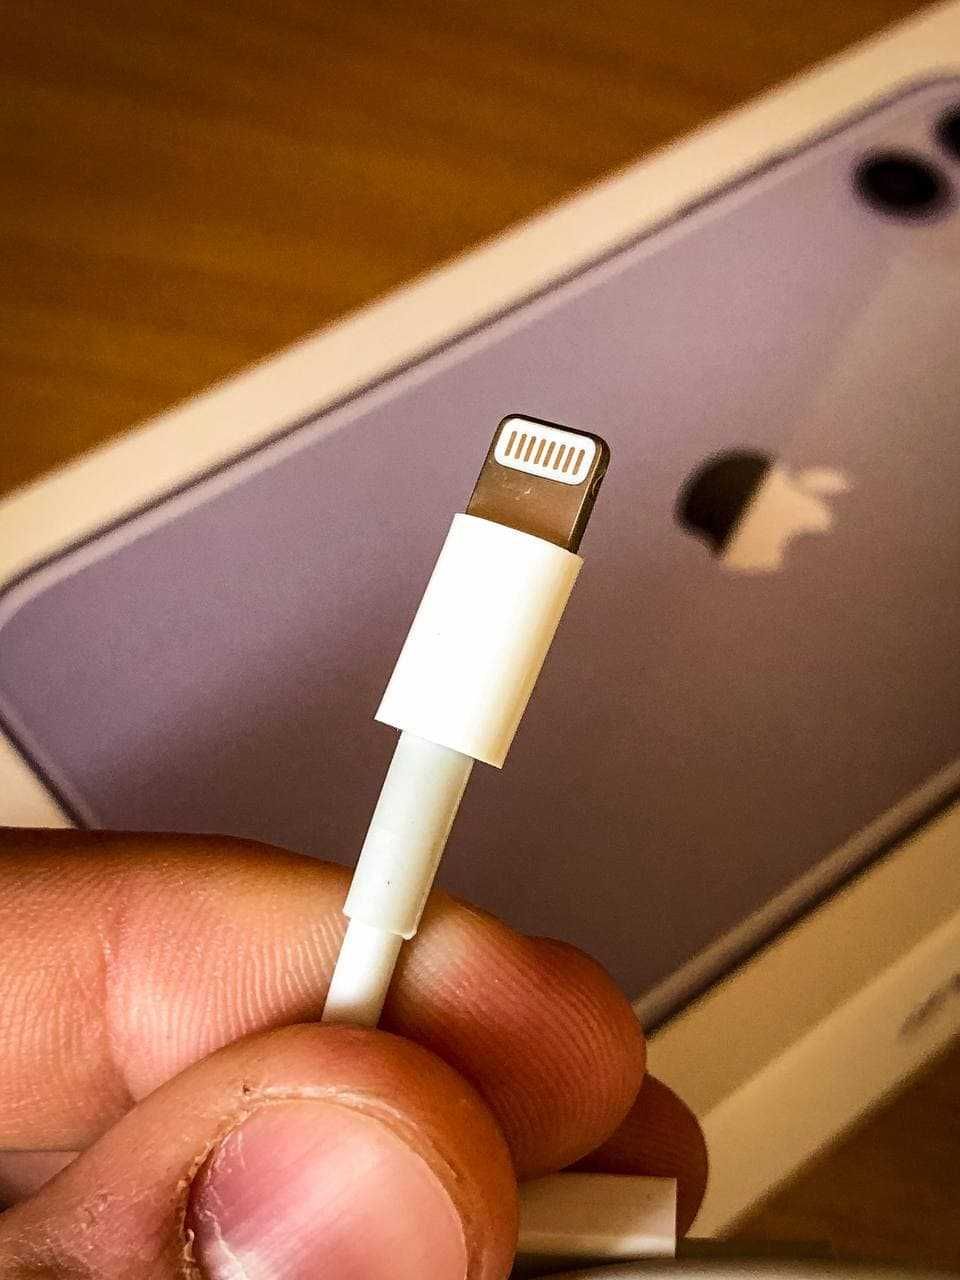 Зарядка Apple iPhone ORIGINAL кабель адаптер блок шнур вилка айфон